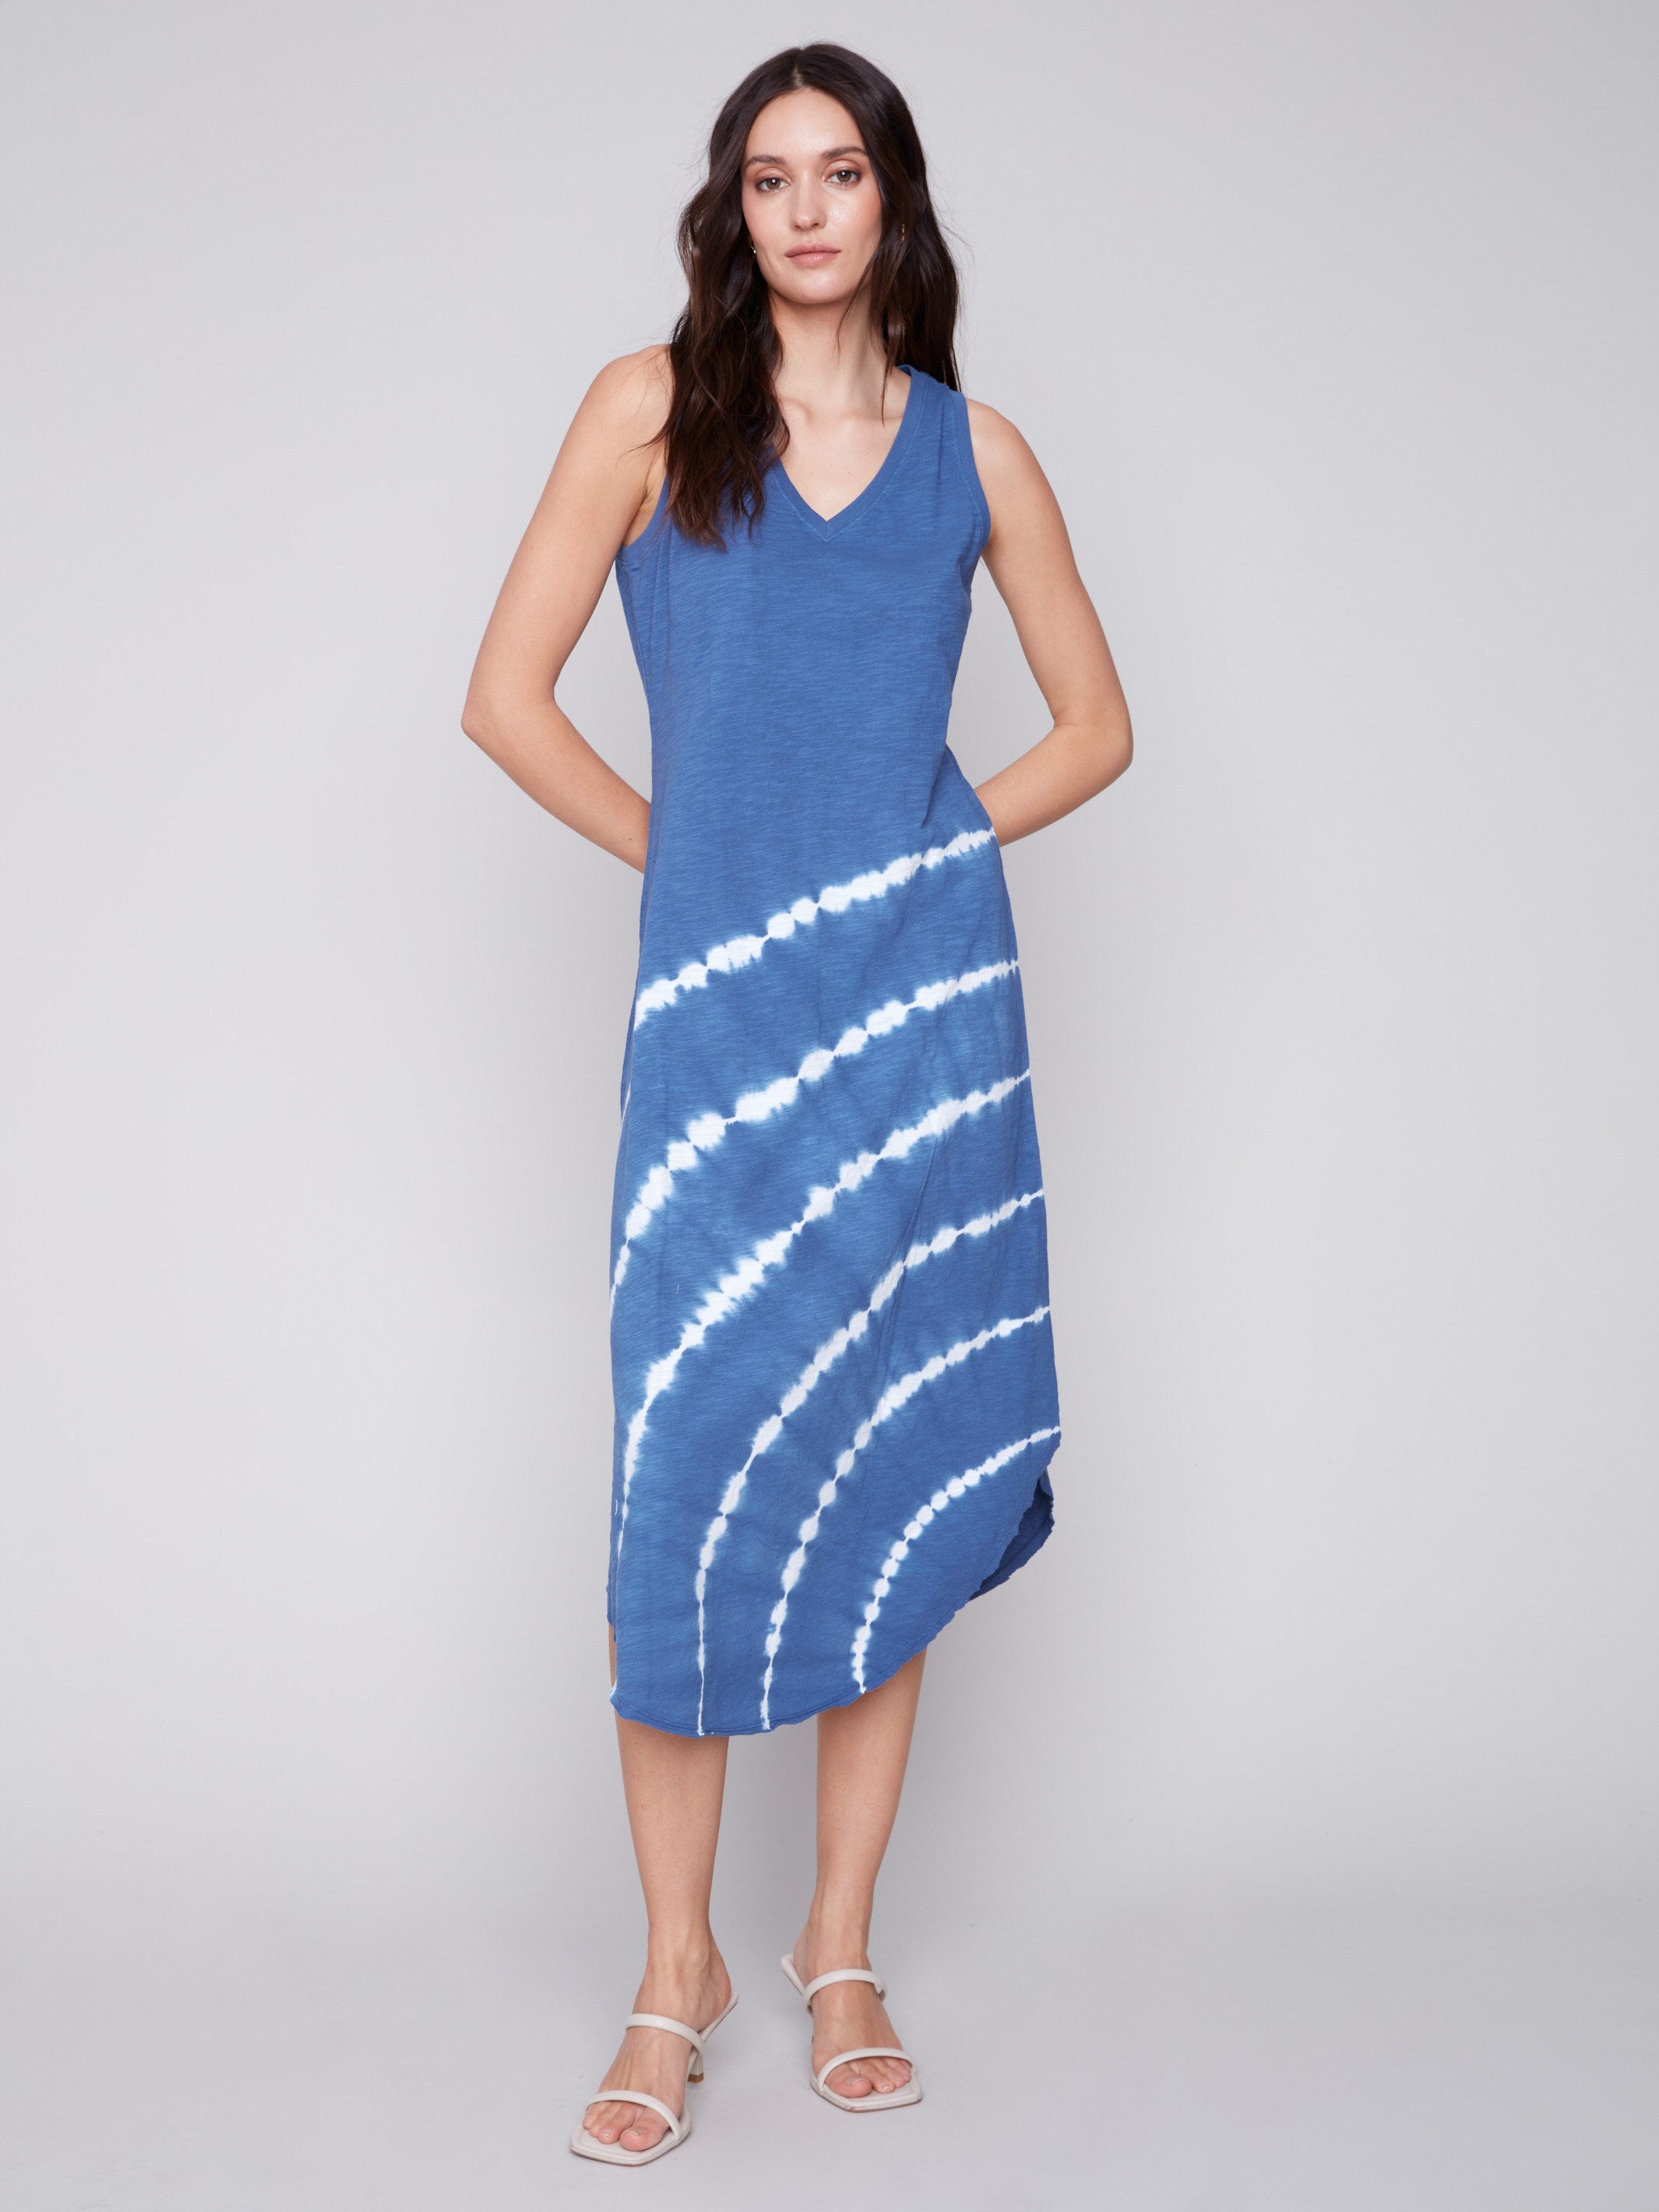 Printed Sleeveless Cotton Dress - Denim - Charlie B Collection Canada - Image 1